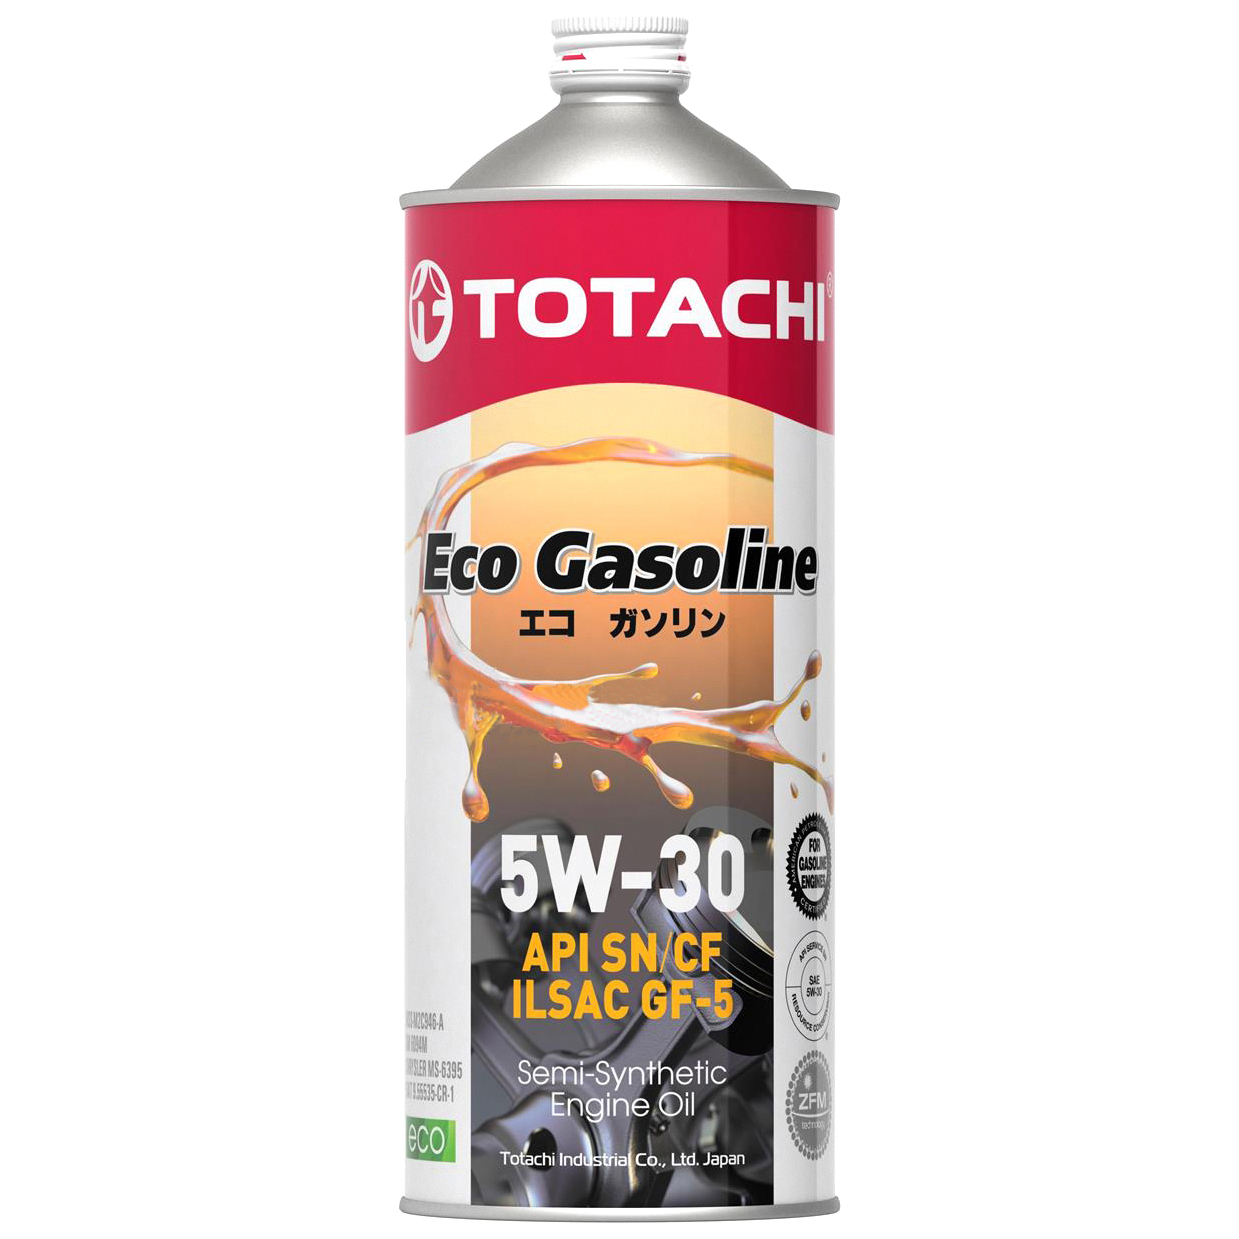 фото Моторное масло totachi eco gasoline 5w-30, 1л полусинтетическое 10801